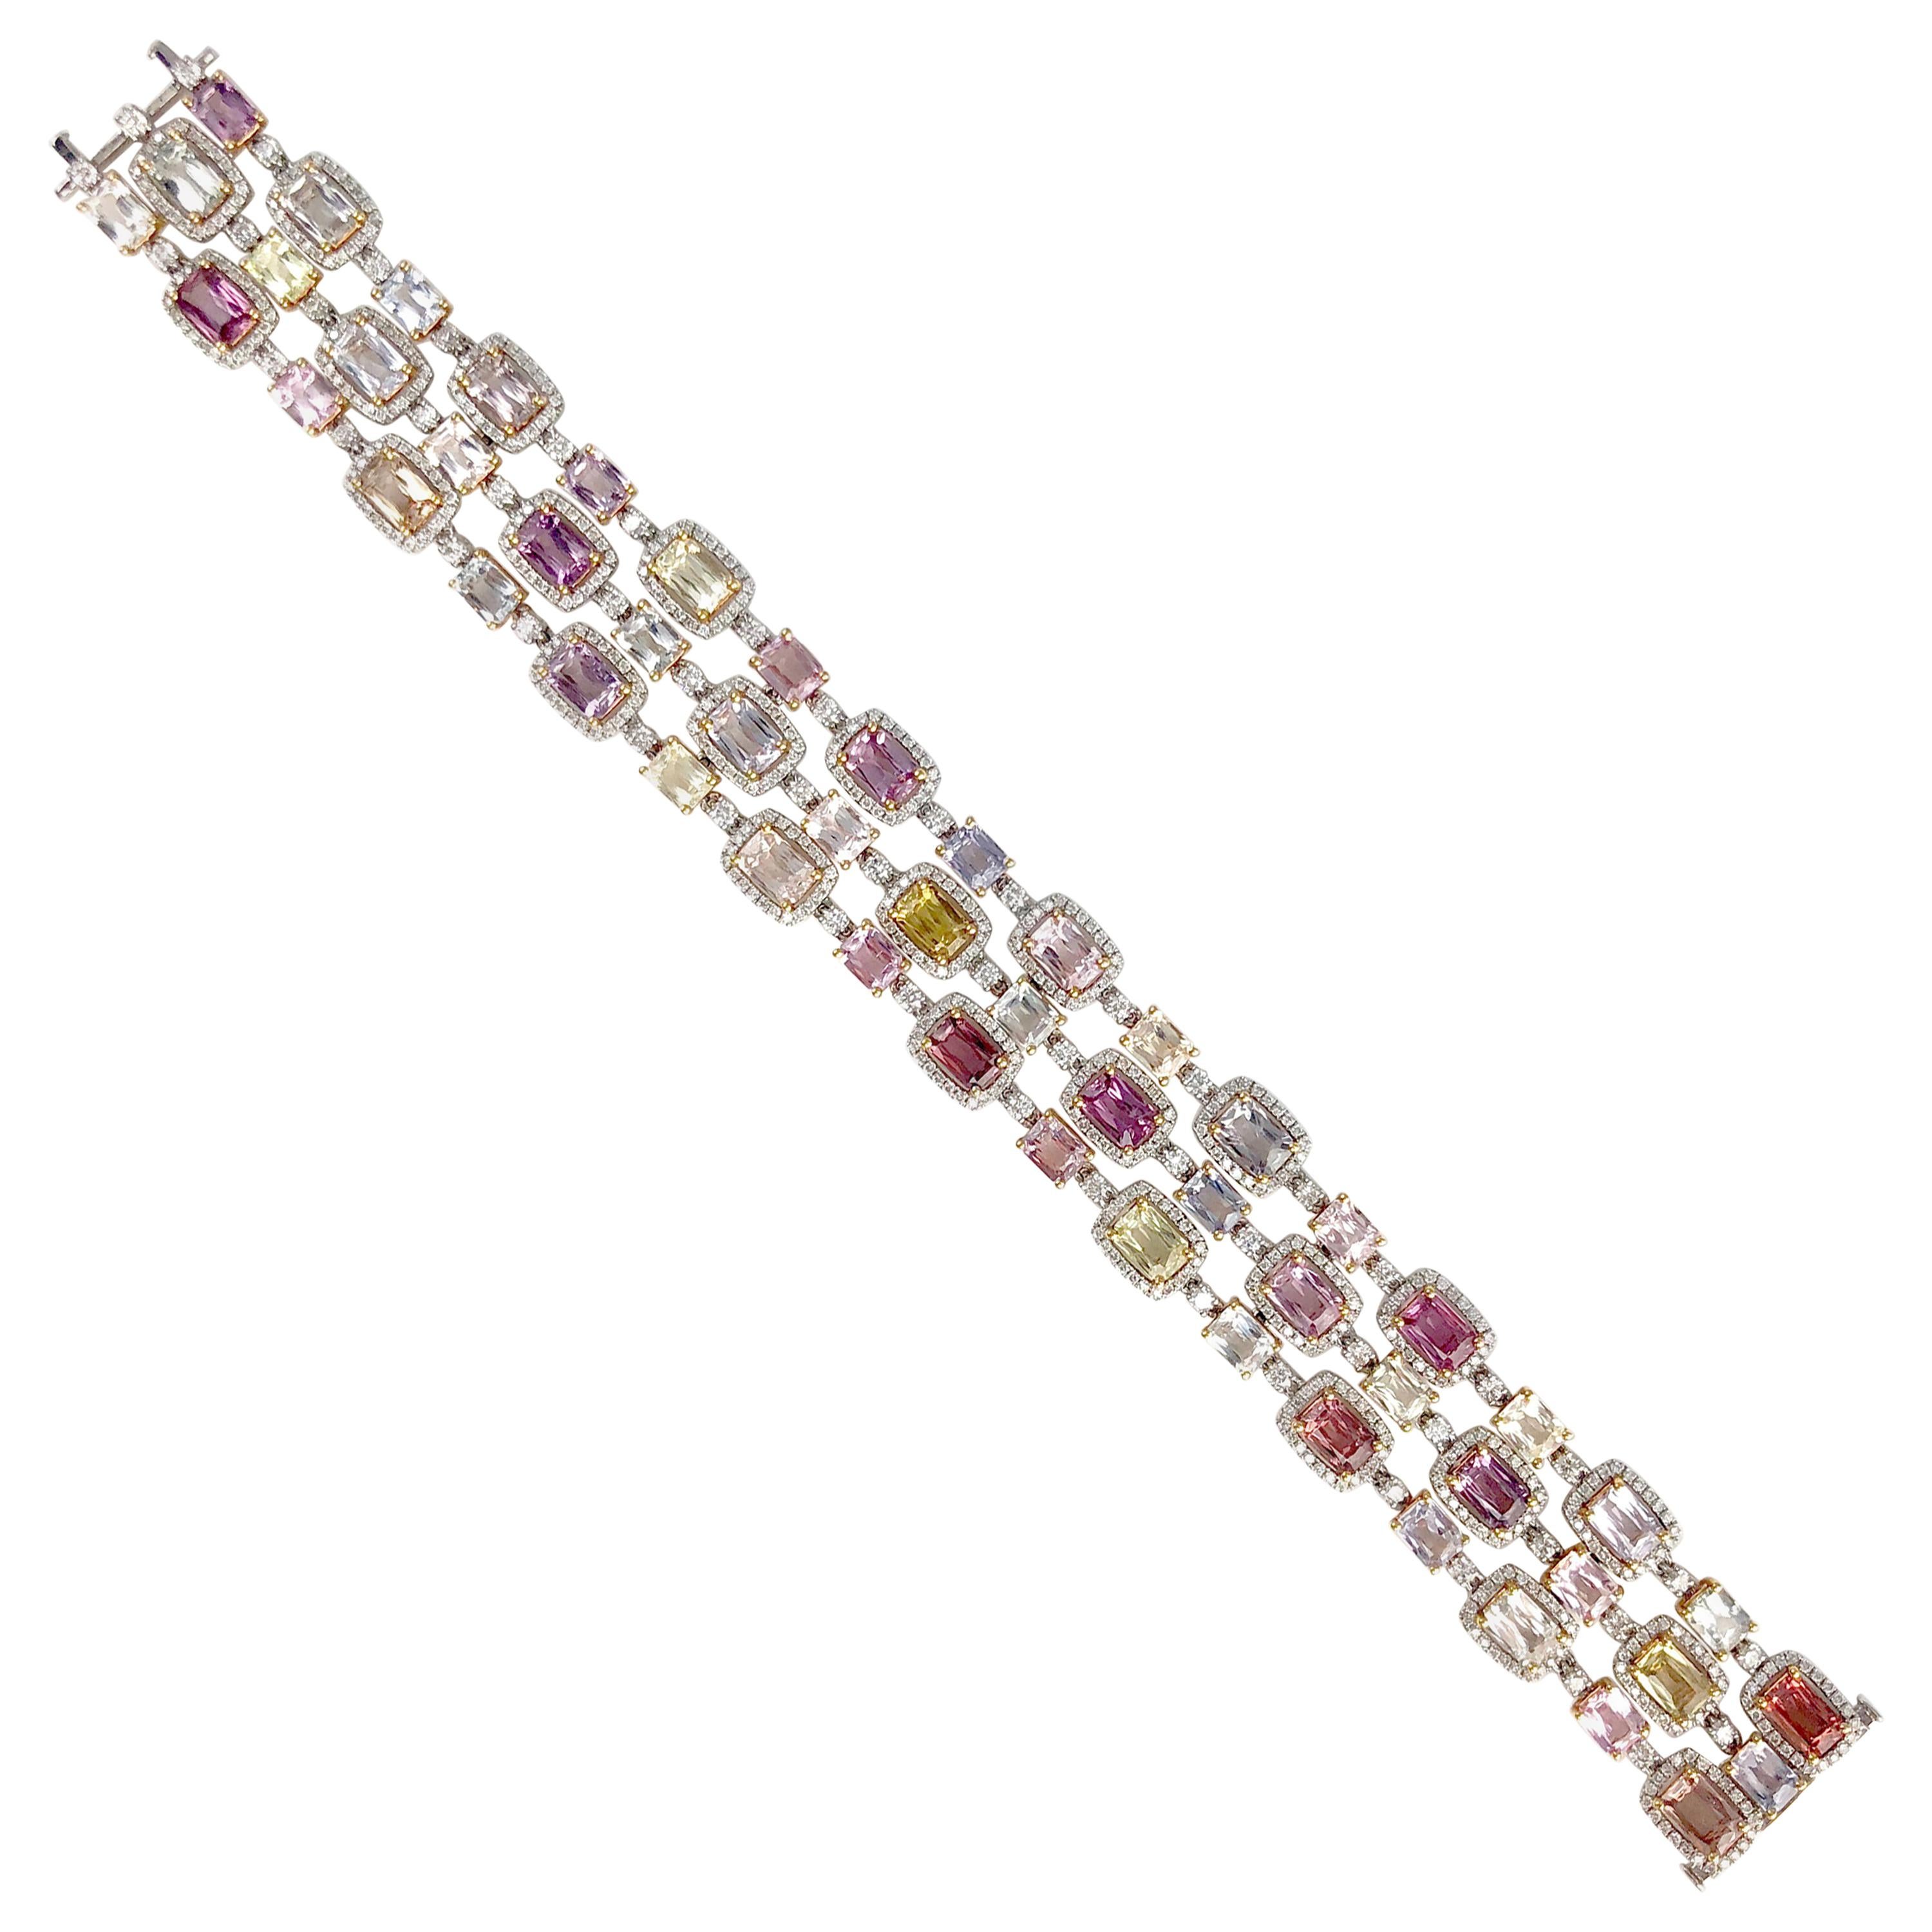 DiamondTown 31.54 Carat Natural Color Sapphire and Diamond Bracelet